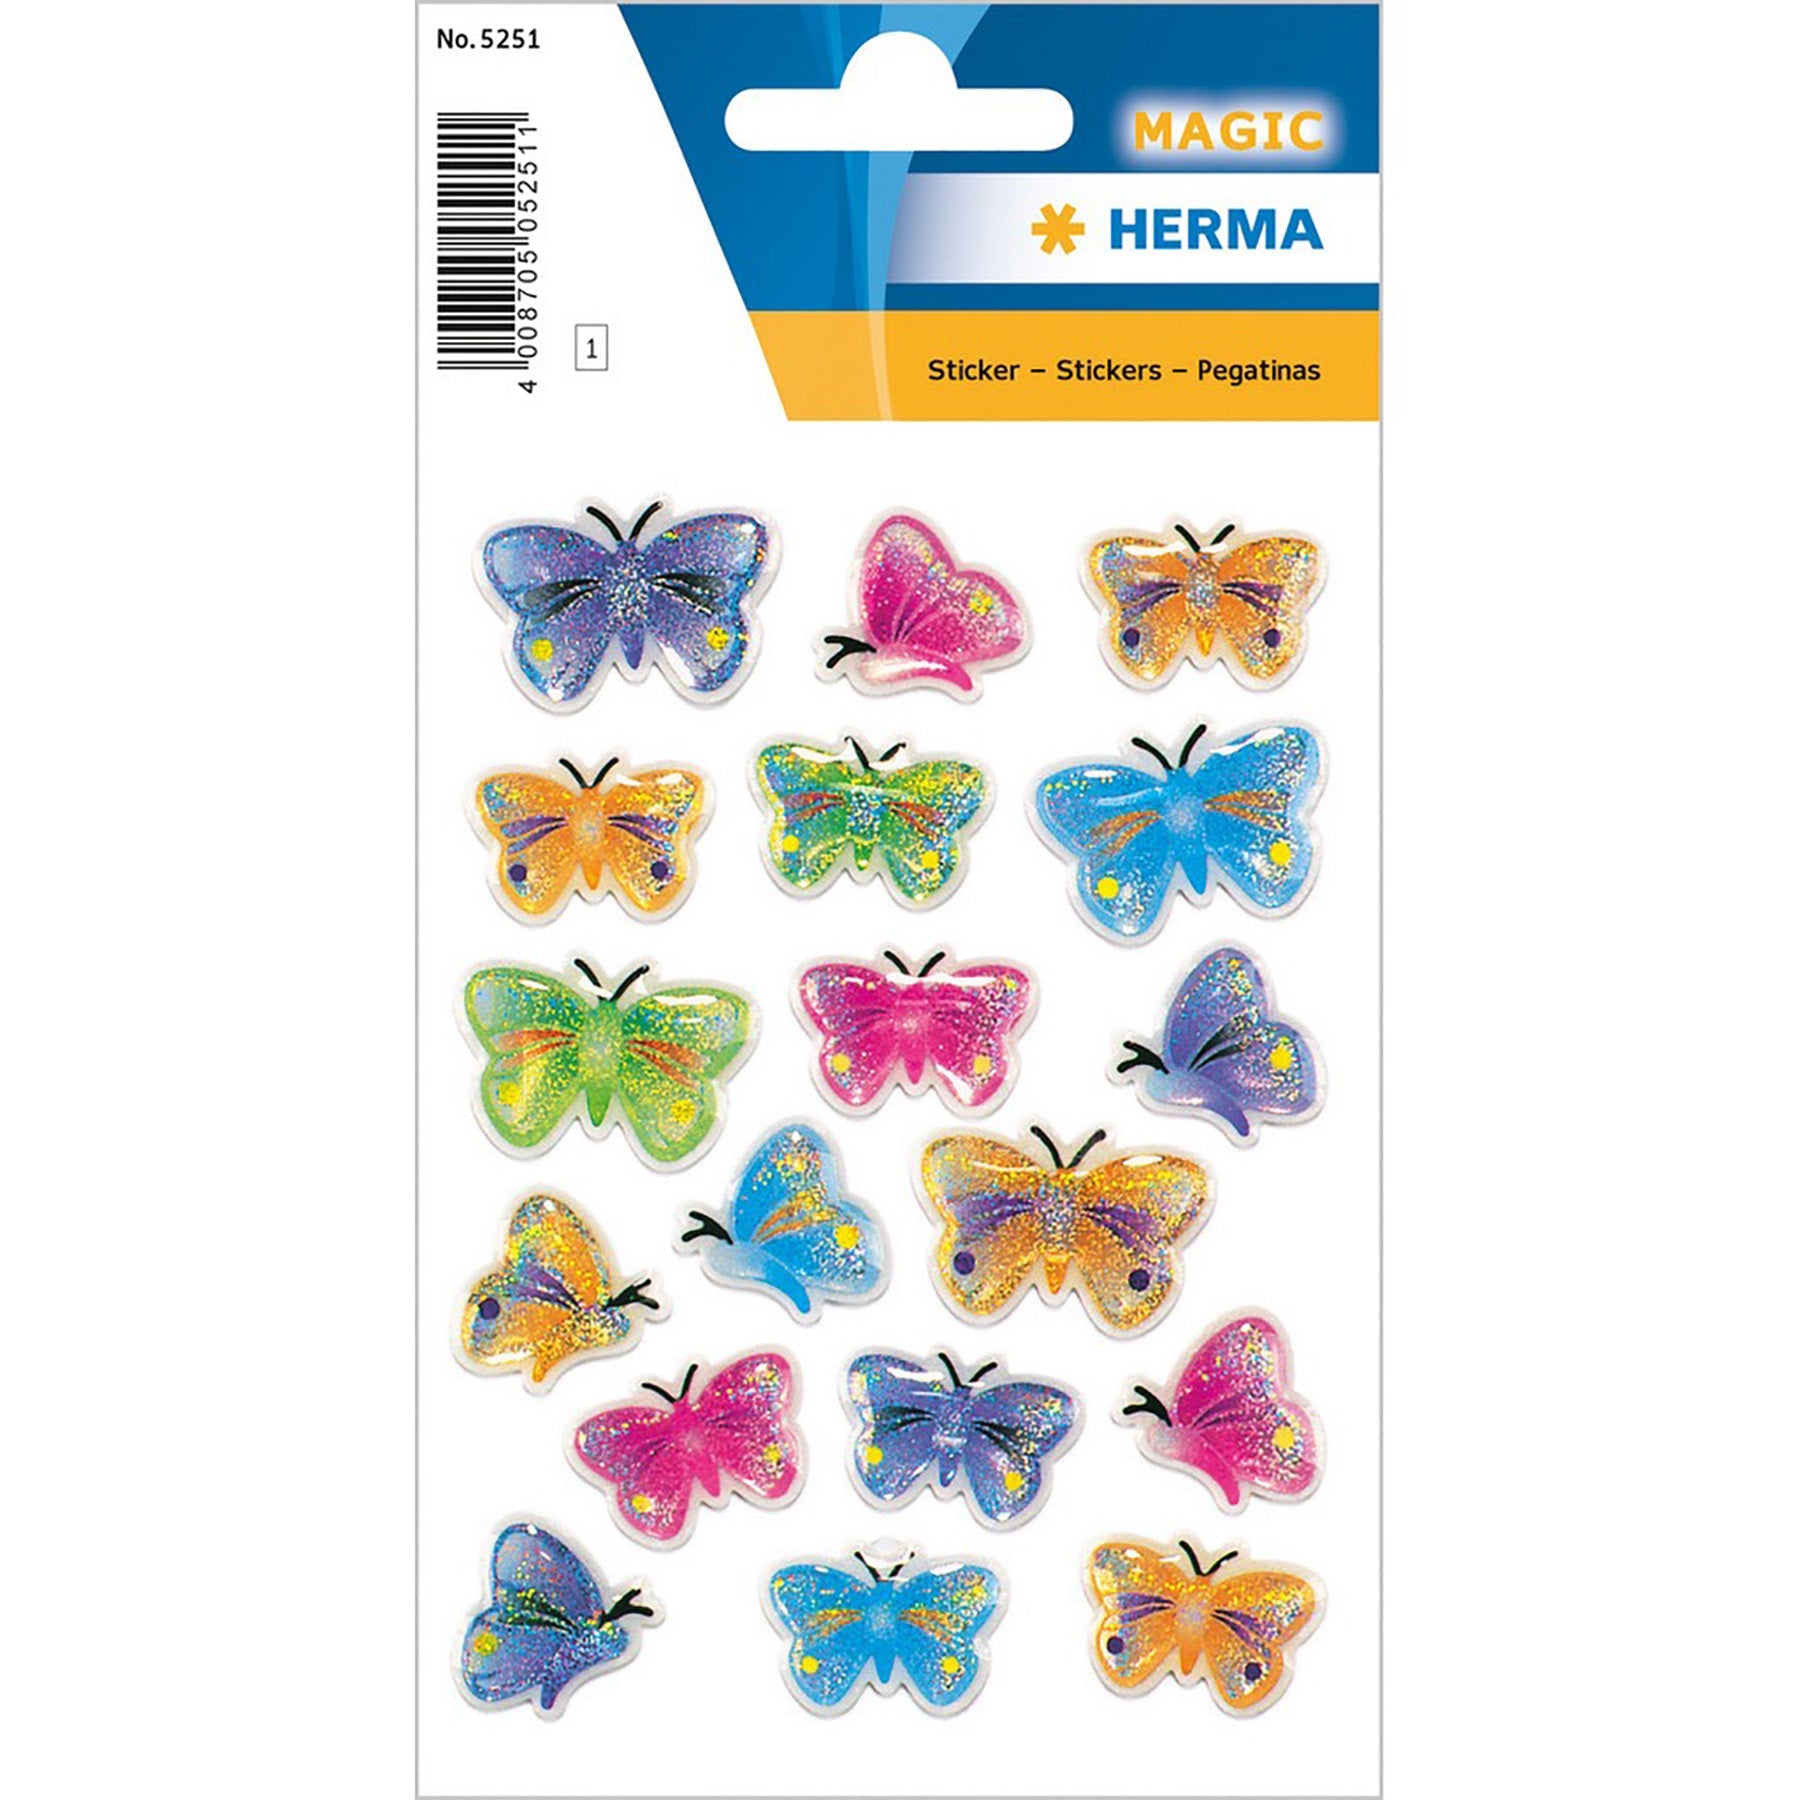 Herma Magic Stickers Butterflies 3D Crystal 4.75x3.1in Sheet